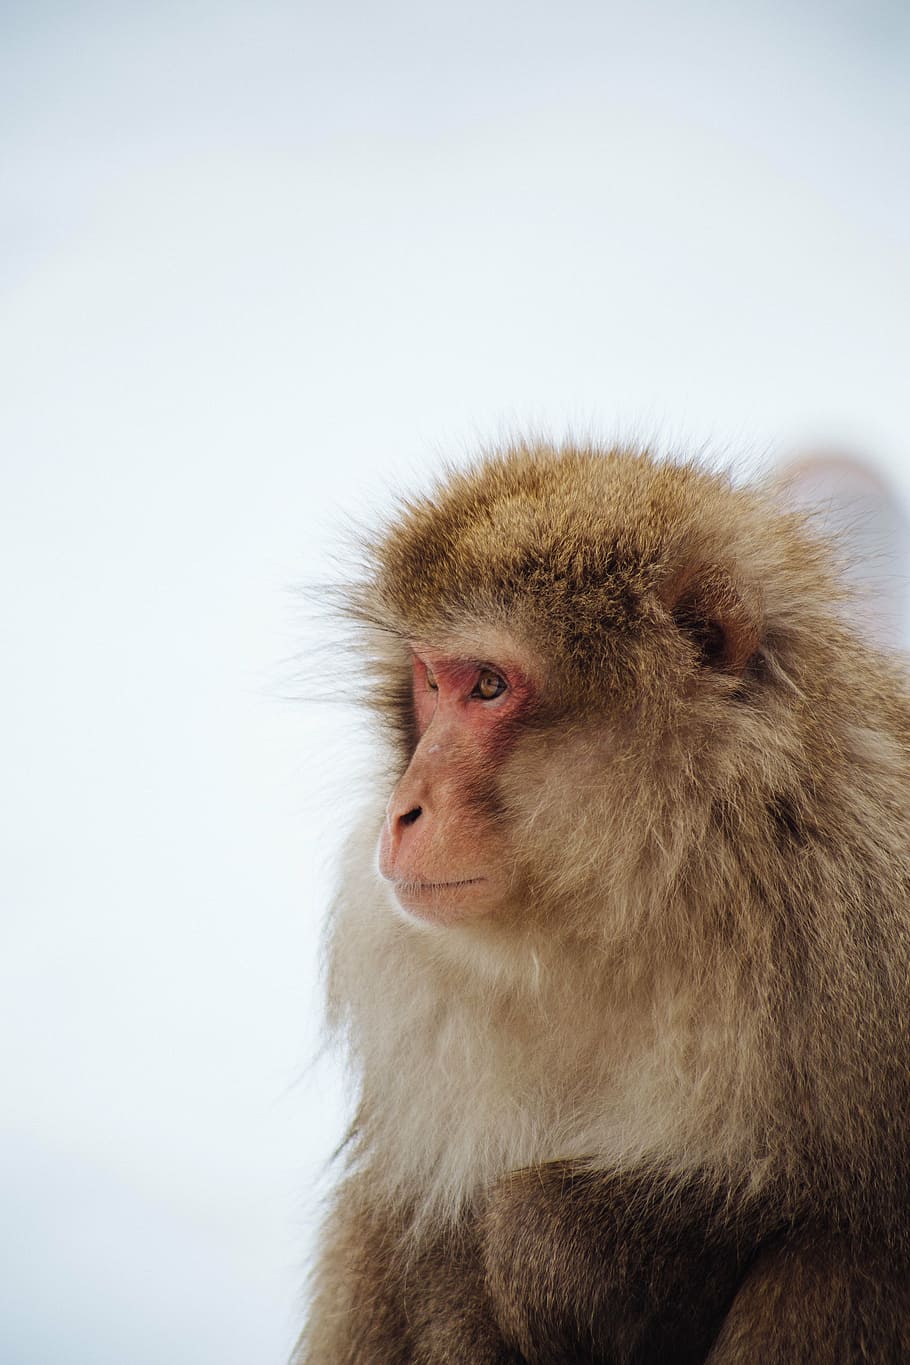 mono macaco japonés, animal, mono, pelaje, vida silvestre, bokeh, desenfoque, un animal, temperatura fría, macaco japonés